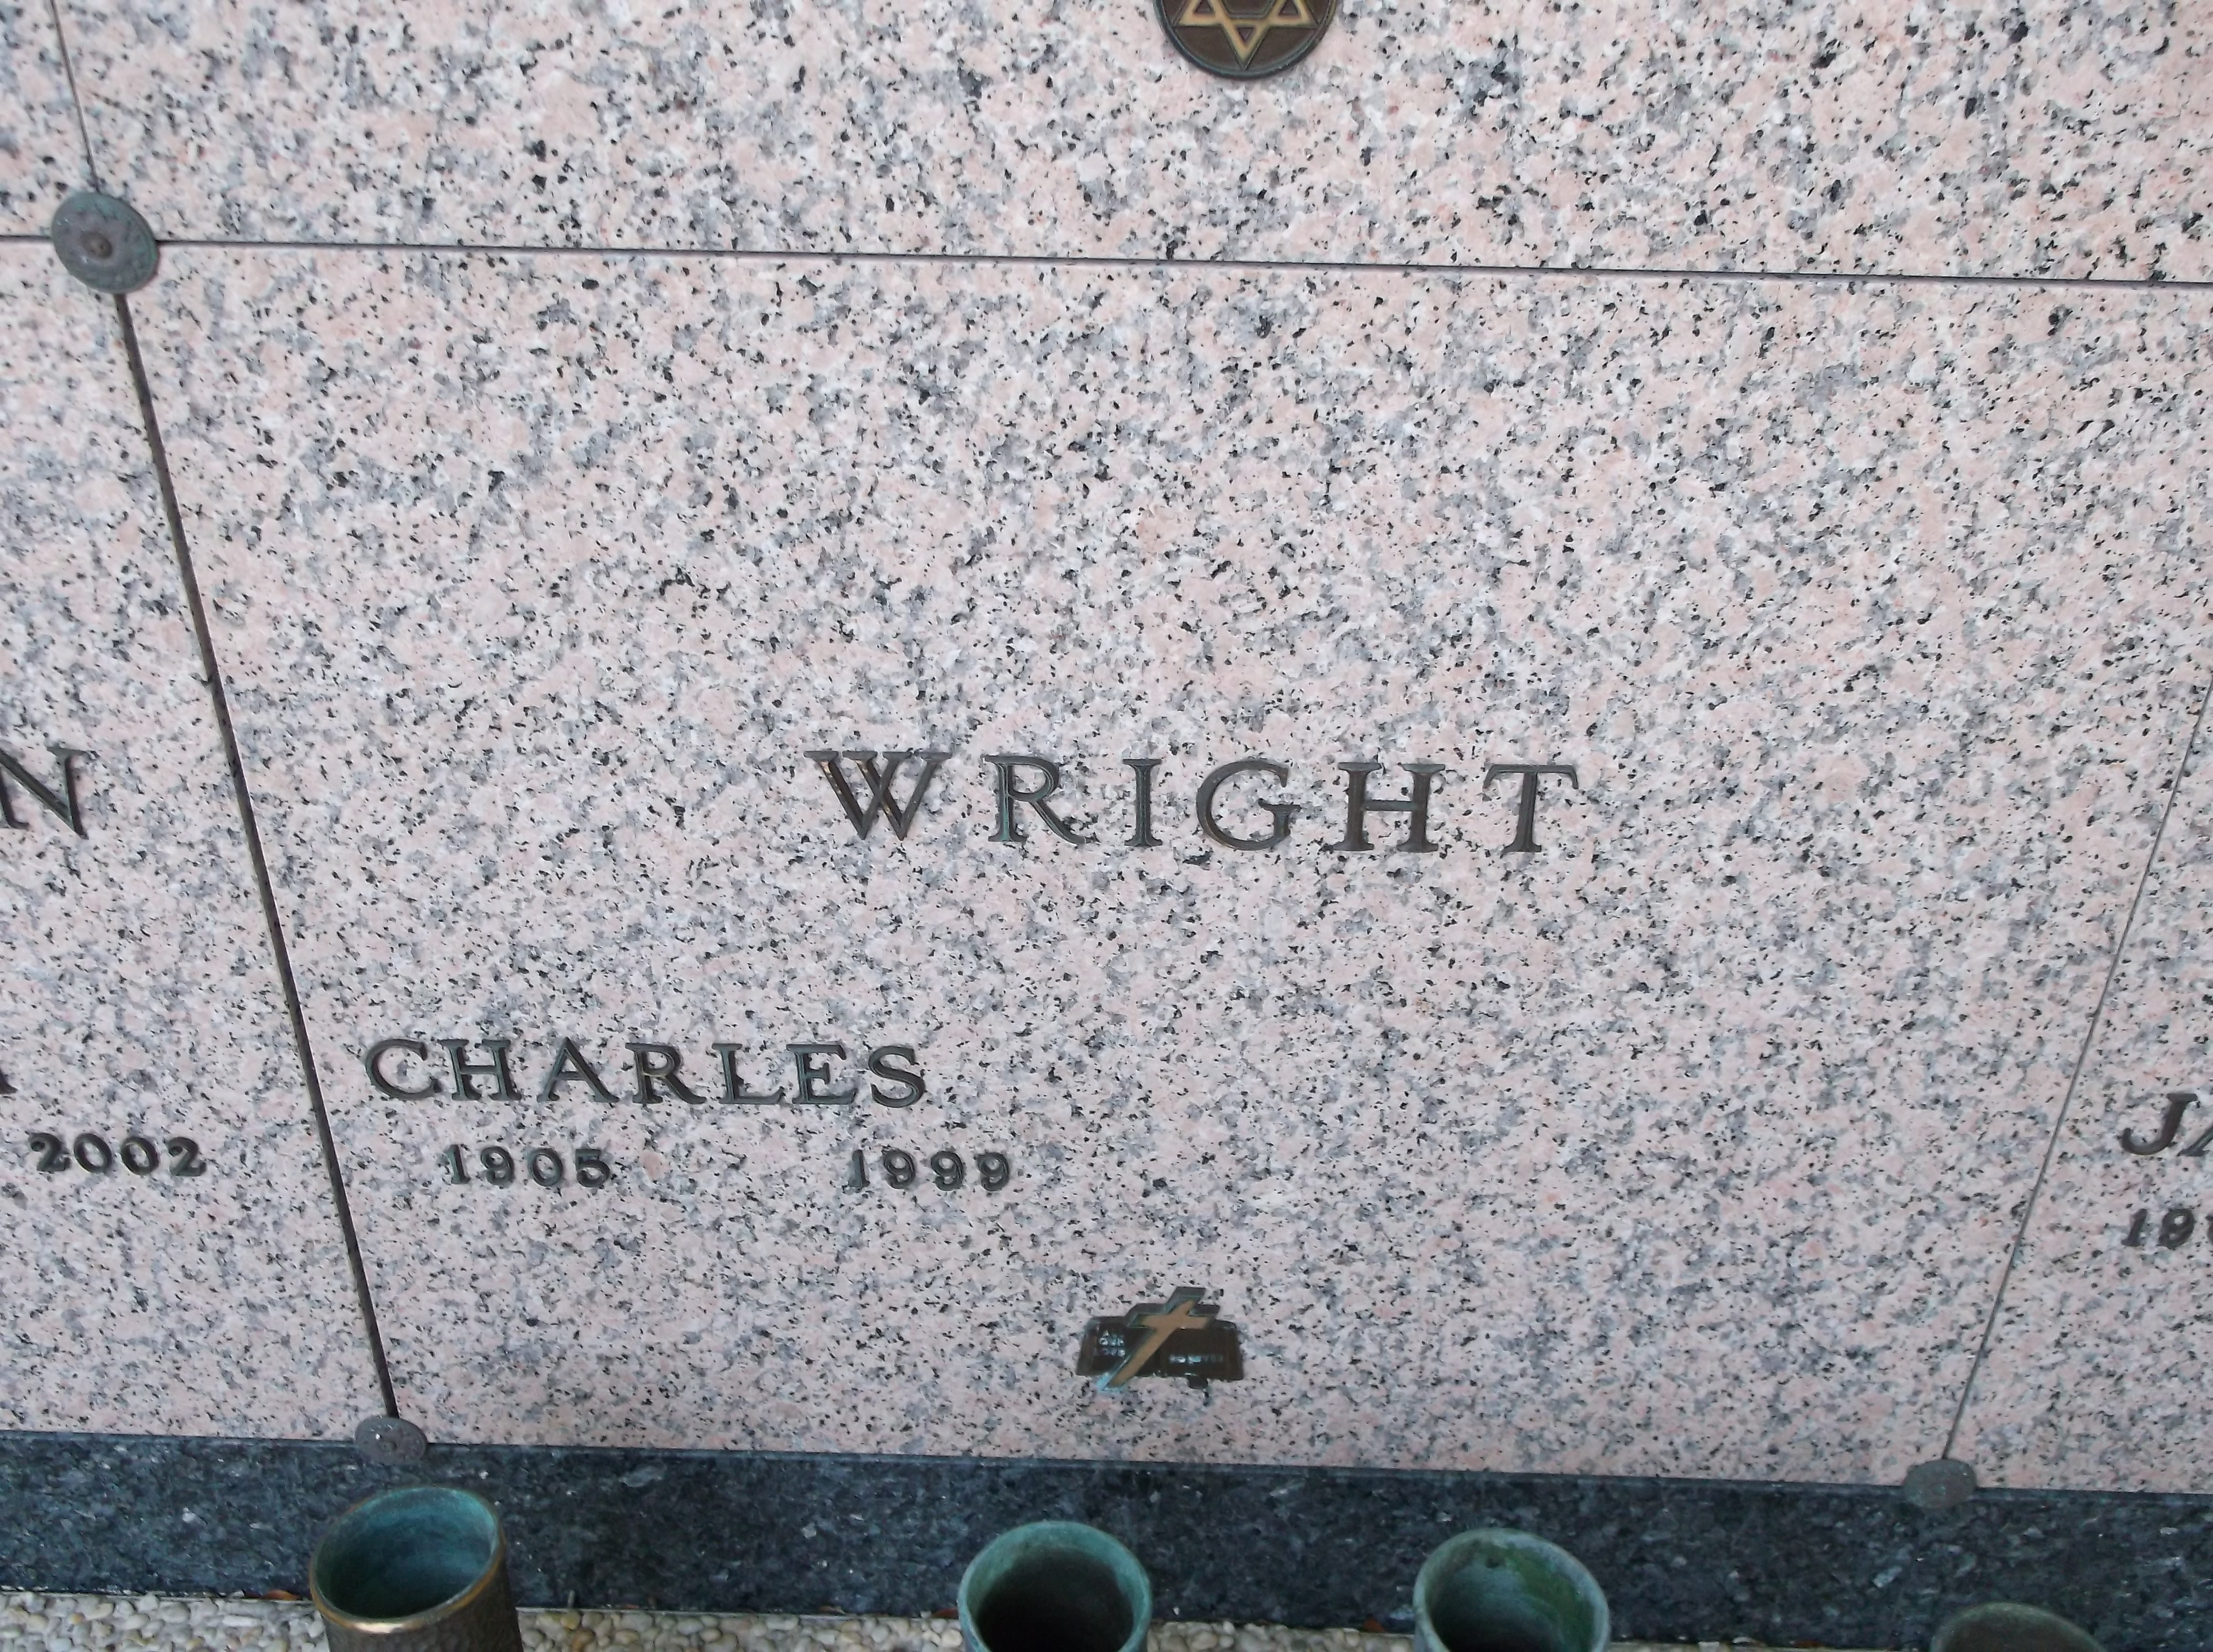 Charles Wright